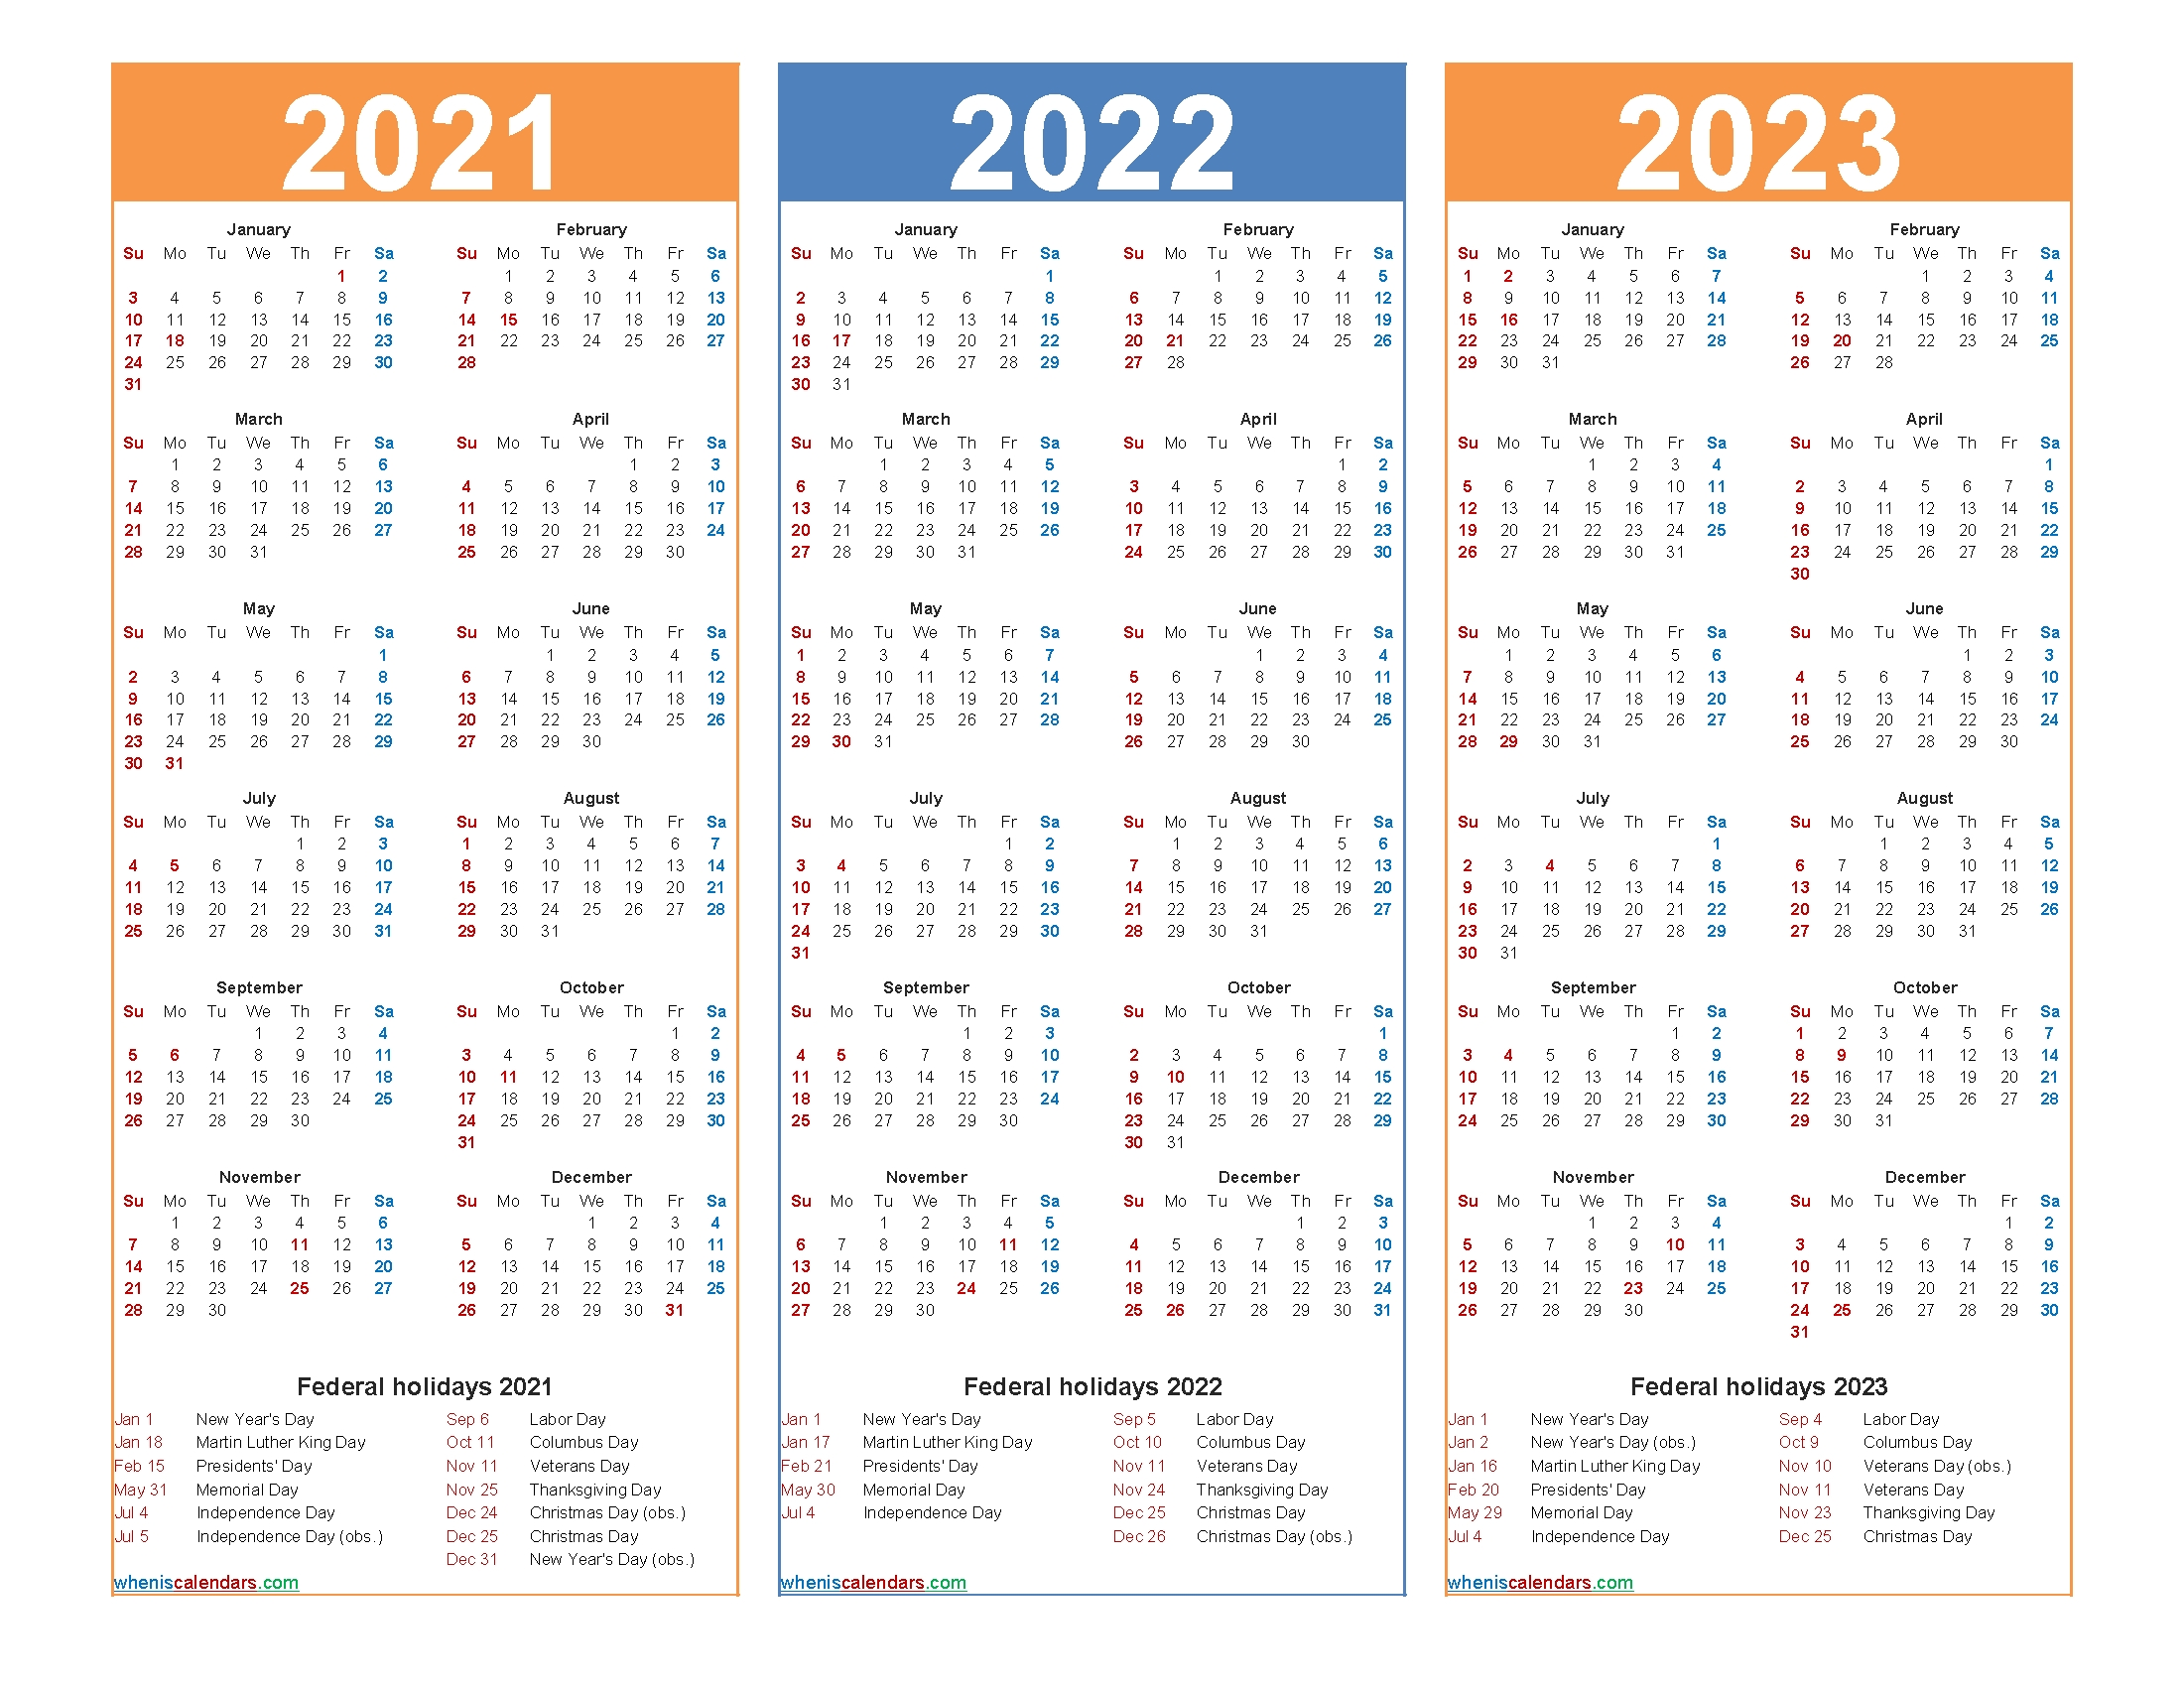 3 Year Calendar 2021 To 2023 Calendar Template Printable